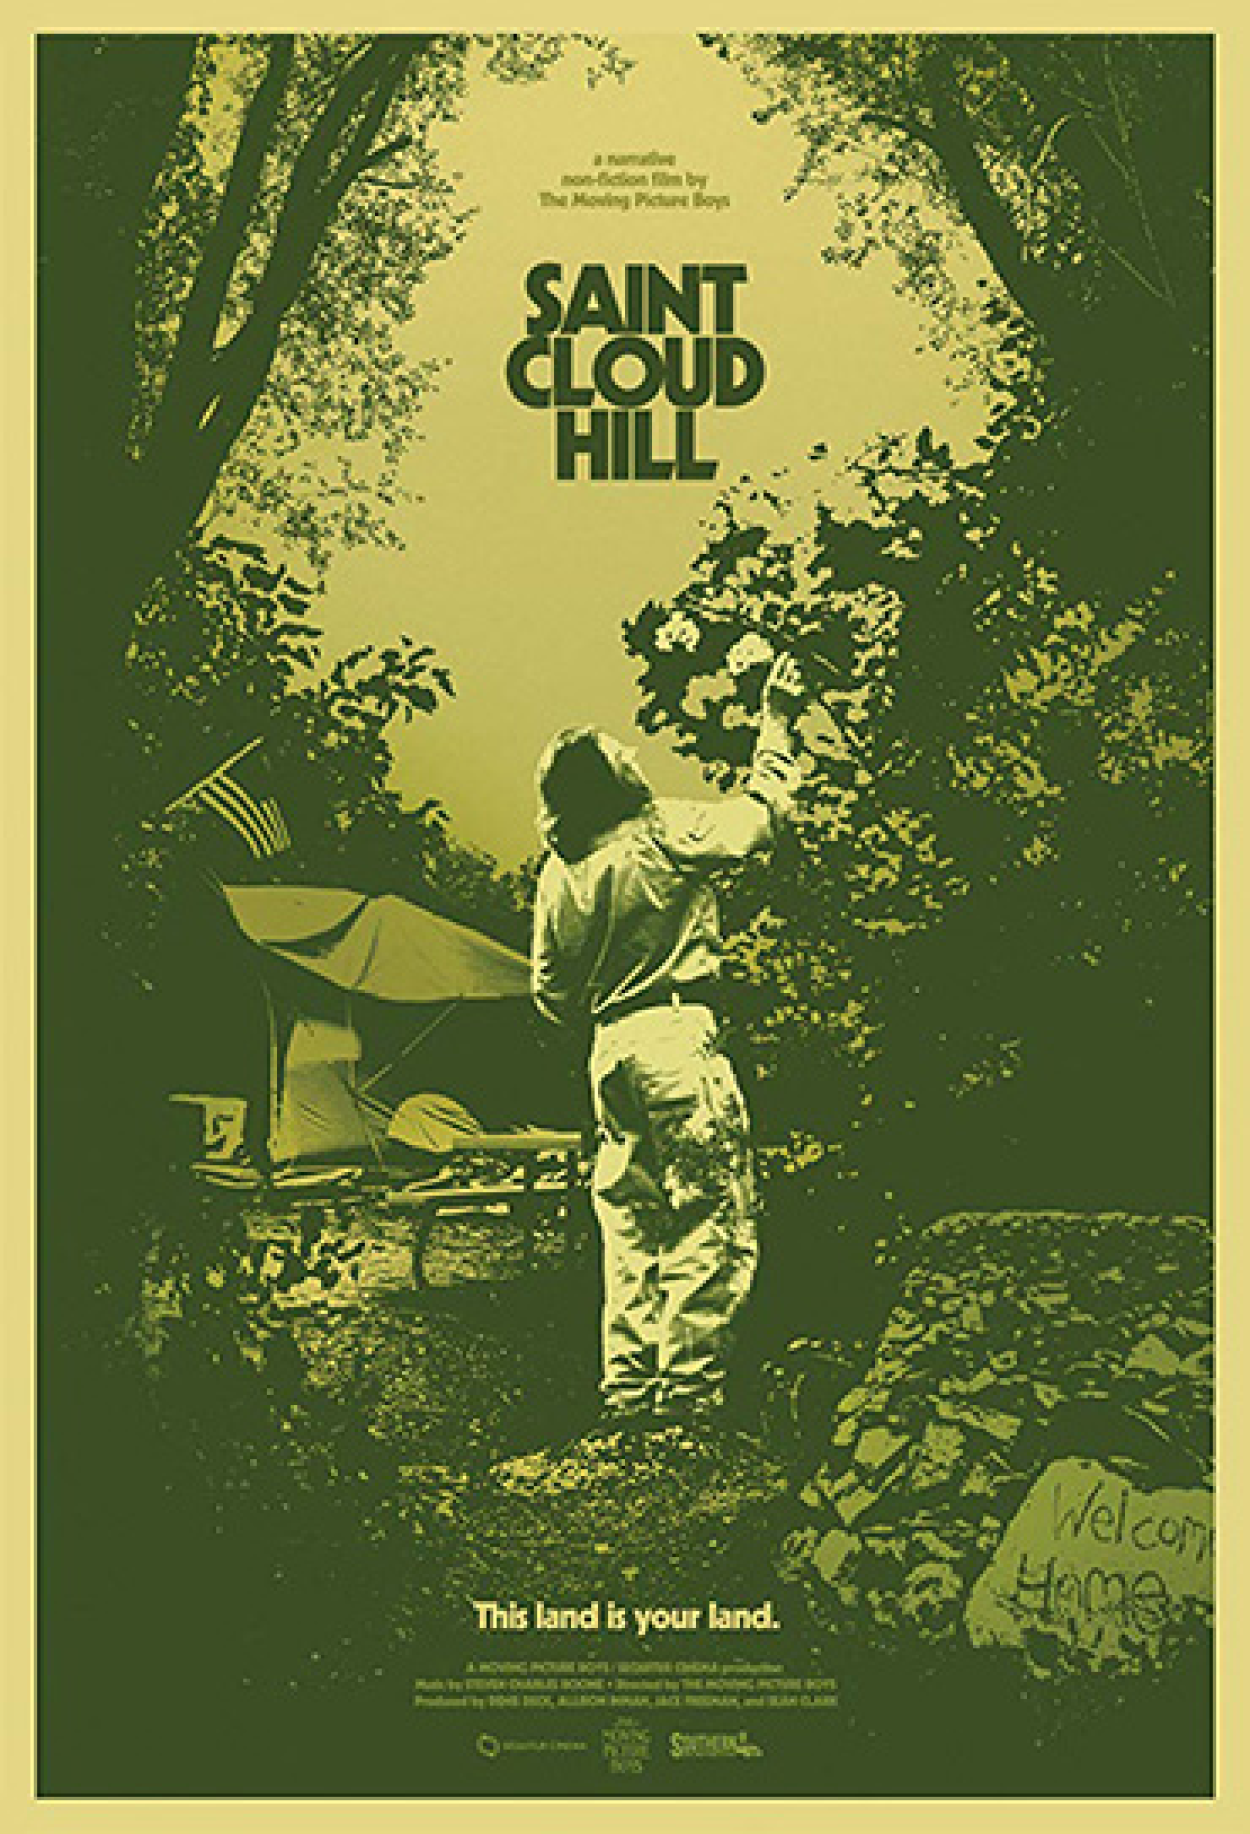 One Tree Hill (Série), Sinopse, Trailers e Curiosidades - Cinema10